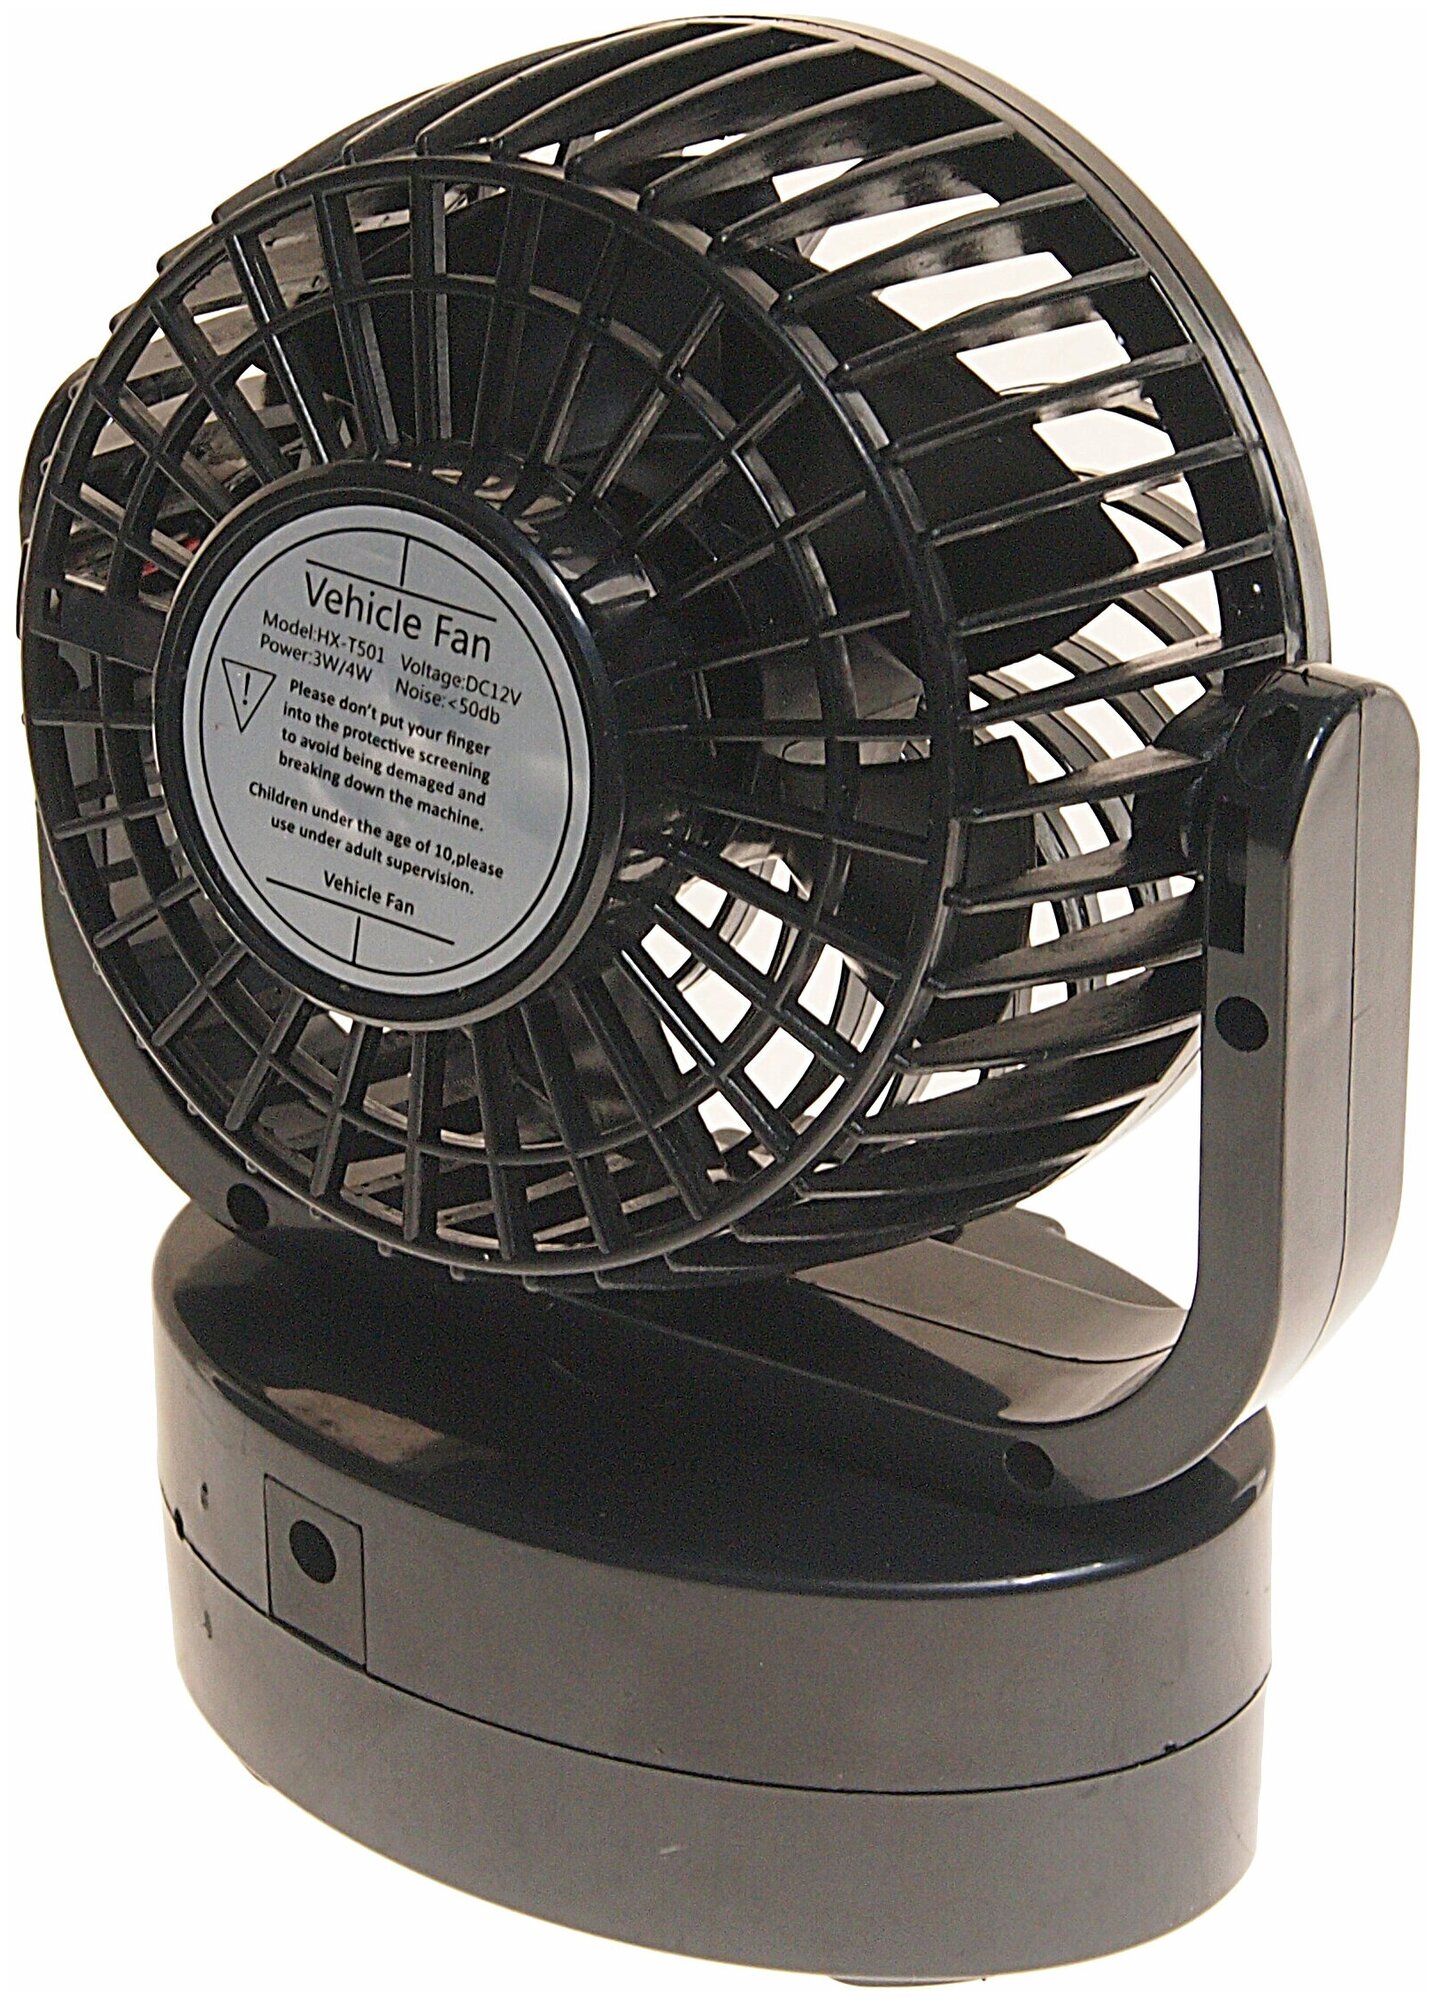 Вентилятор HX-501 10см (4") 12V (3/3.5W) 2-скорости, автовращение, с регулируемыми углами обдува 360 градусов black/blue MITCHELL - фотография № 2